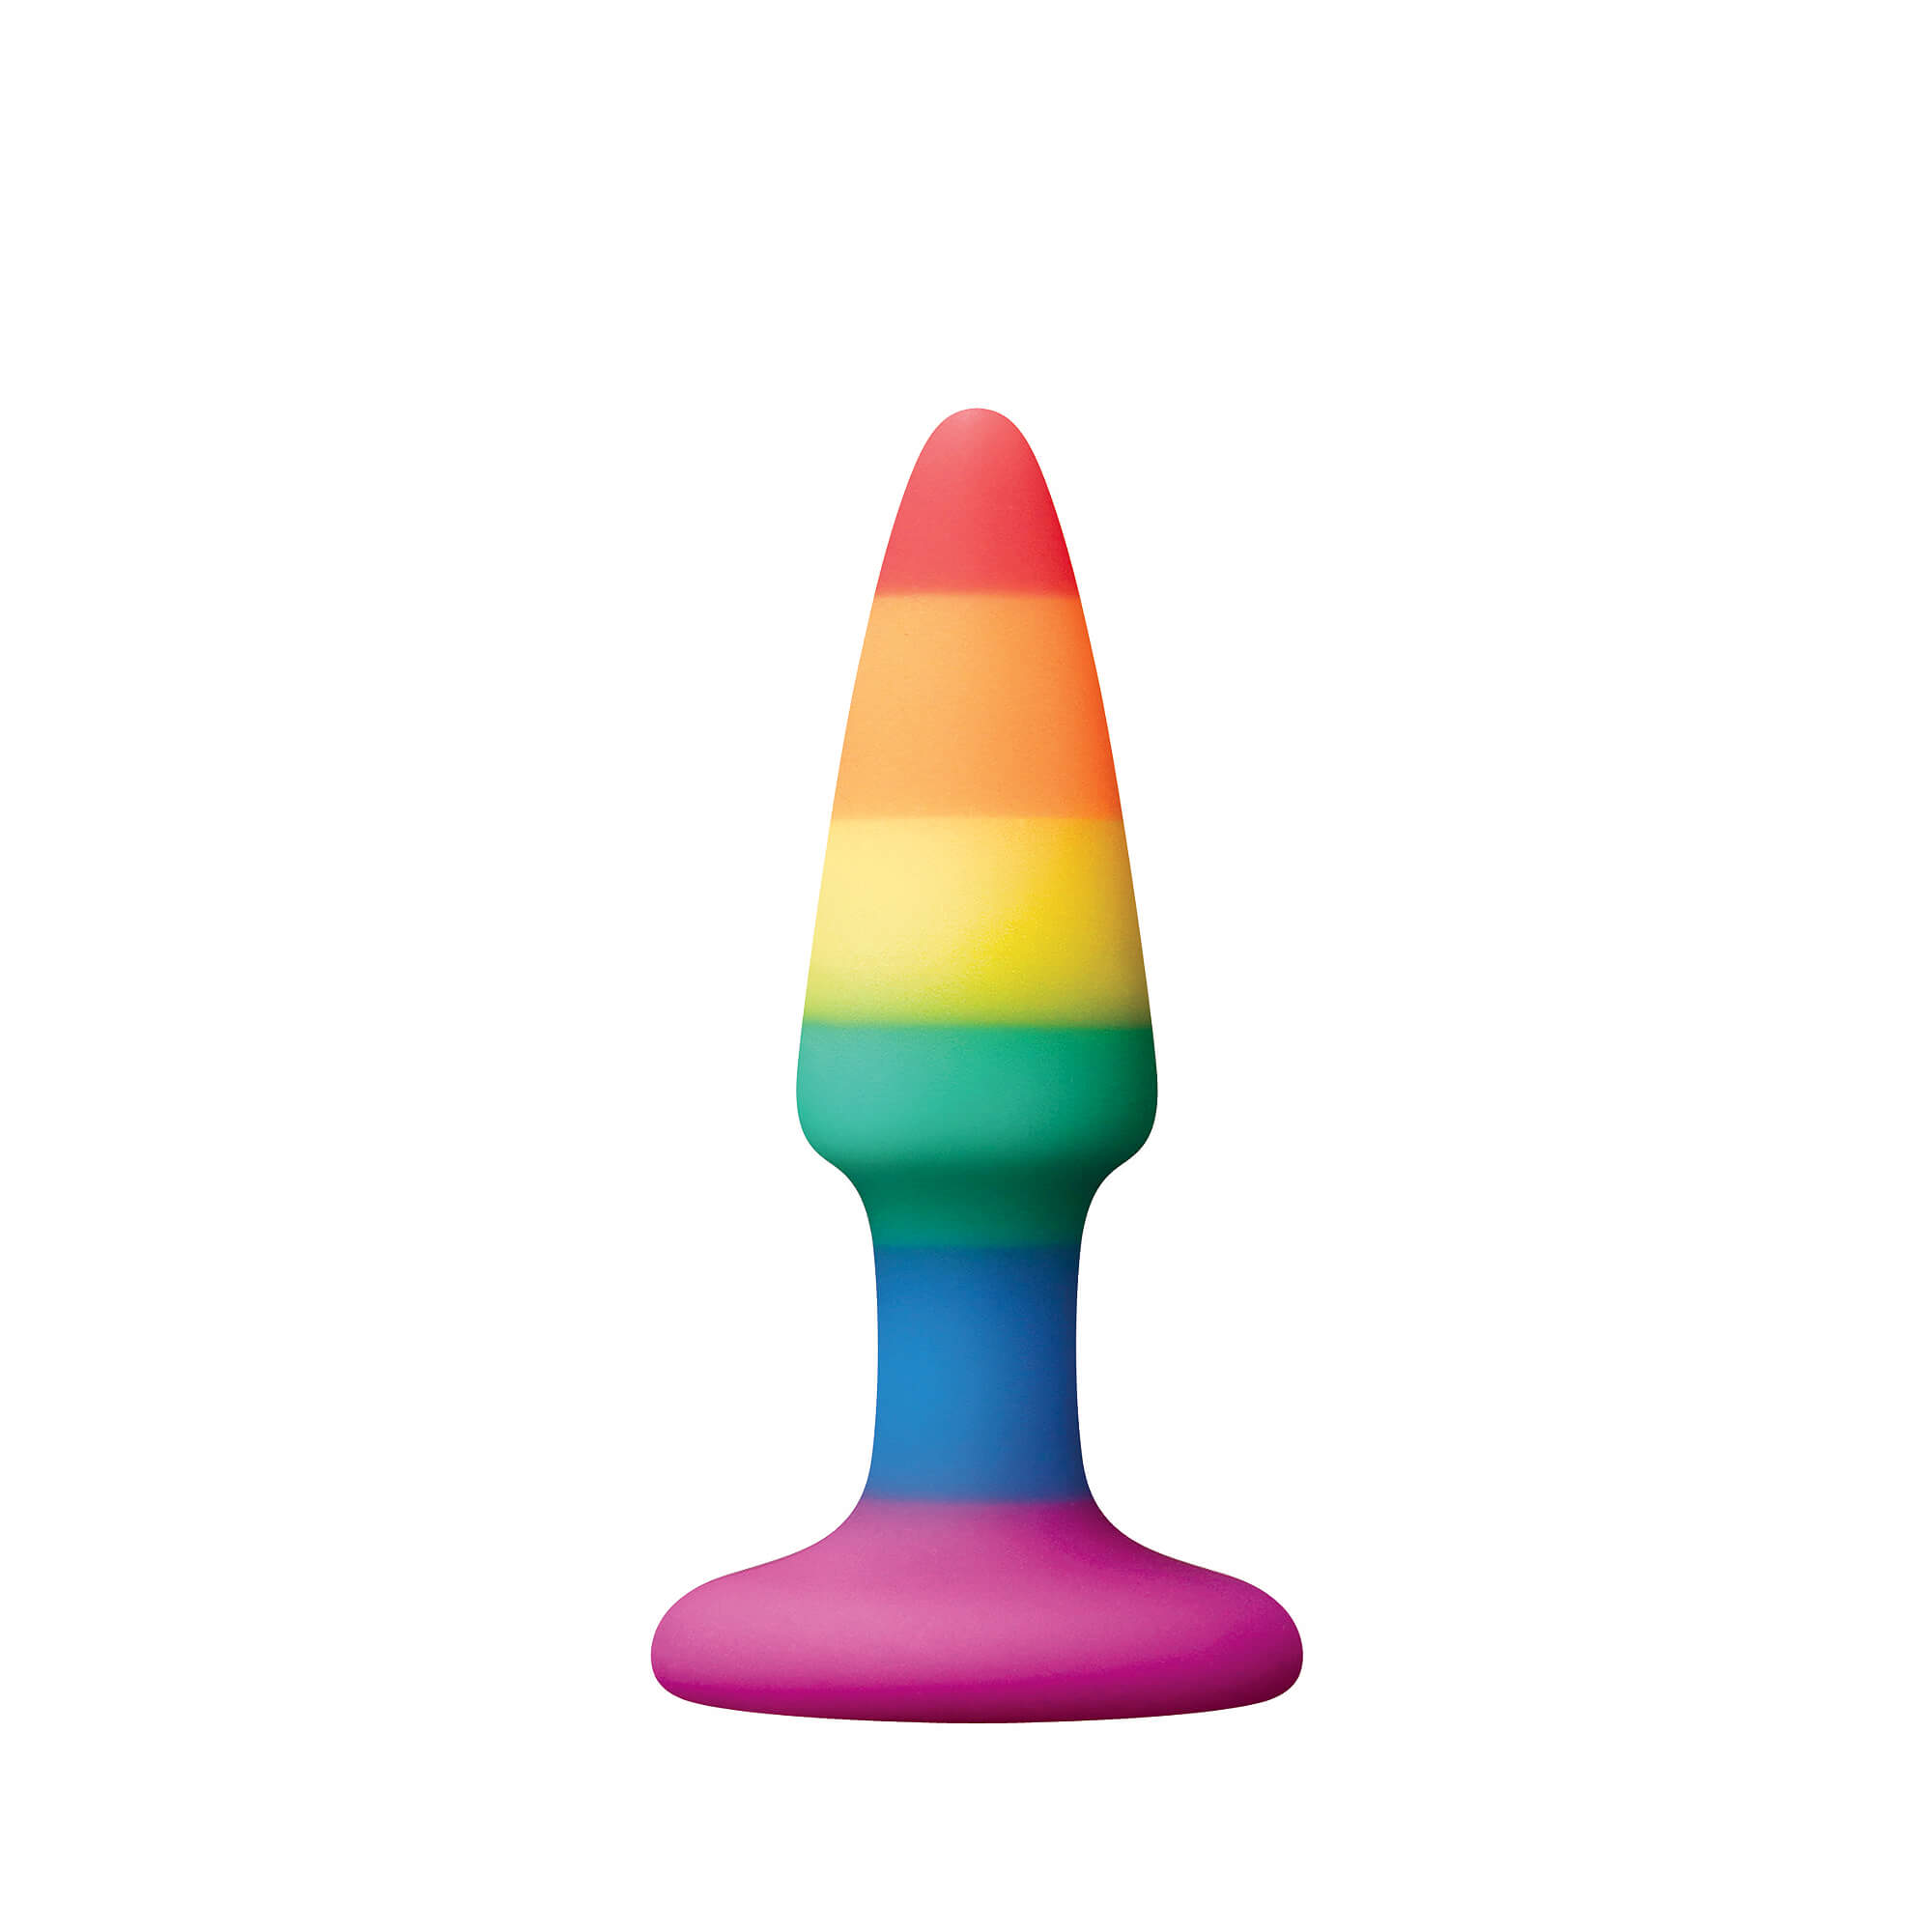 Dúhový análny kolíček NS Toys Colours Pride Edition Pleasure Plug Mini Rainbow 8 x 2 cm